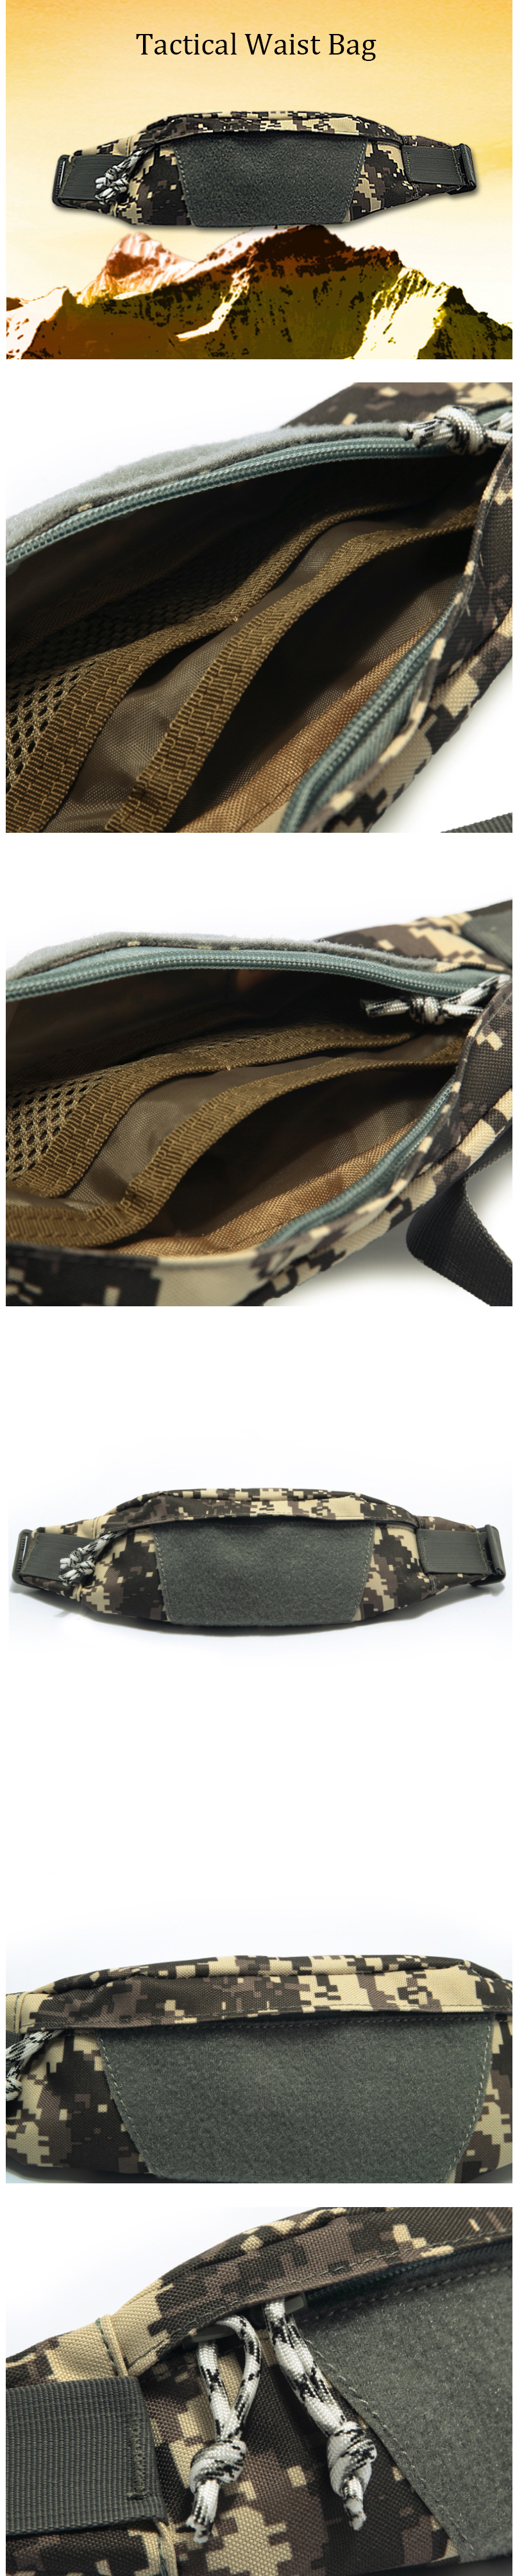 Camouflage-Tactical-Waist-Bag-Cross-Bag-Tactical-Waist-Bag-Outdoor-Fitness-Leisure-Bag-1568909-1